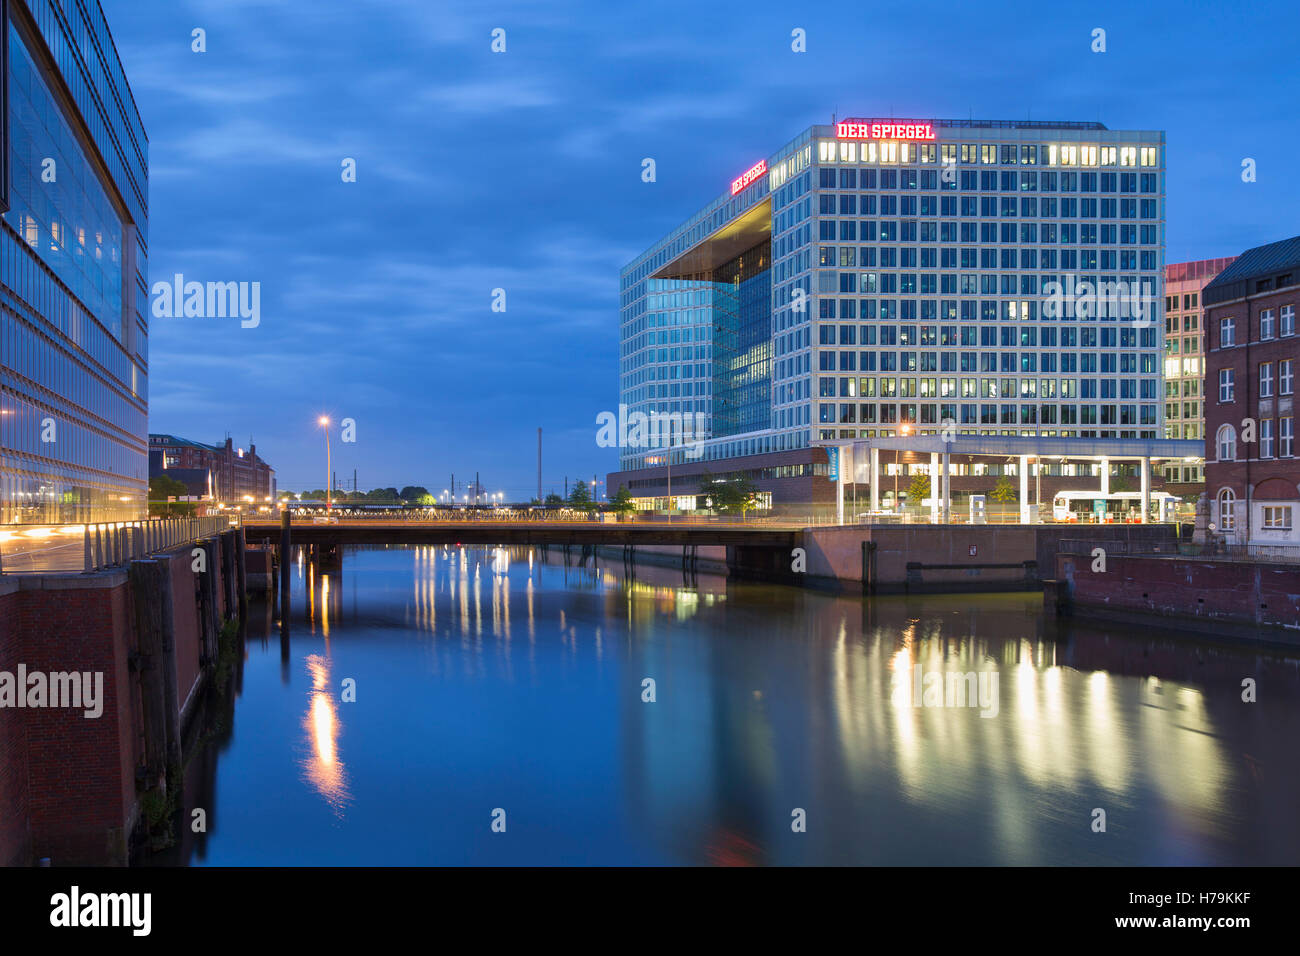 Der Spiegel building, Hamburg, Germany Stock Photo - Alamy